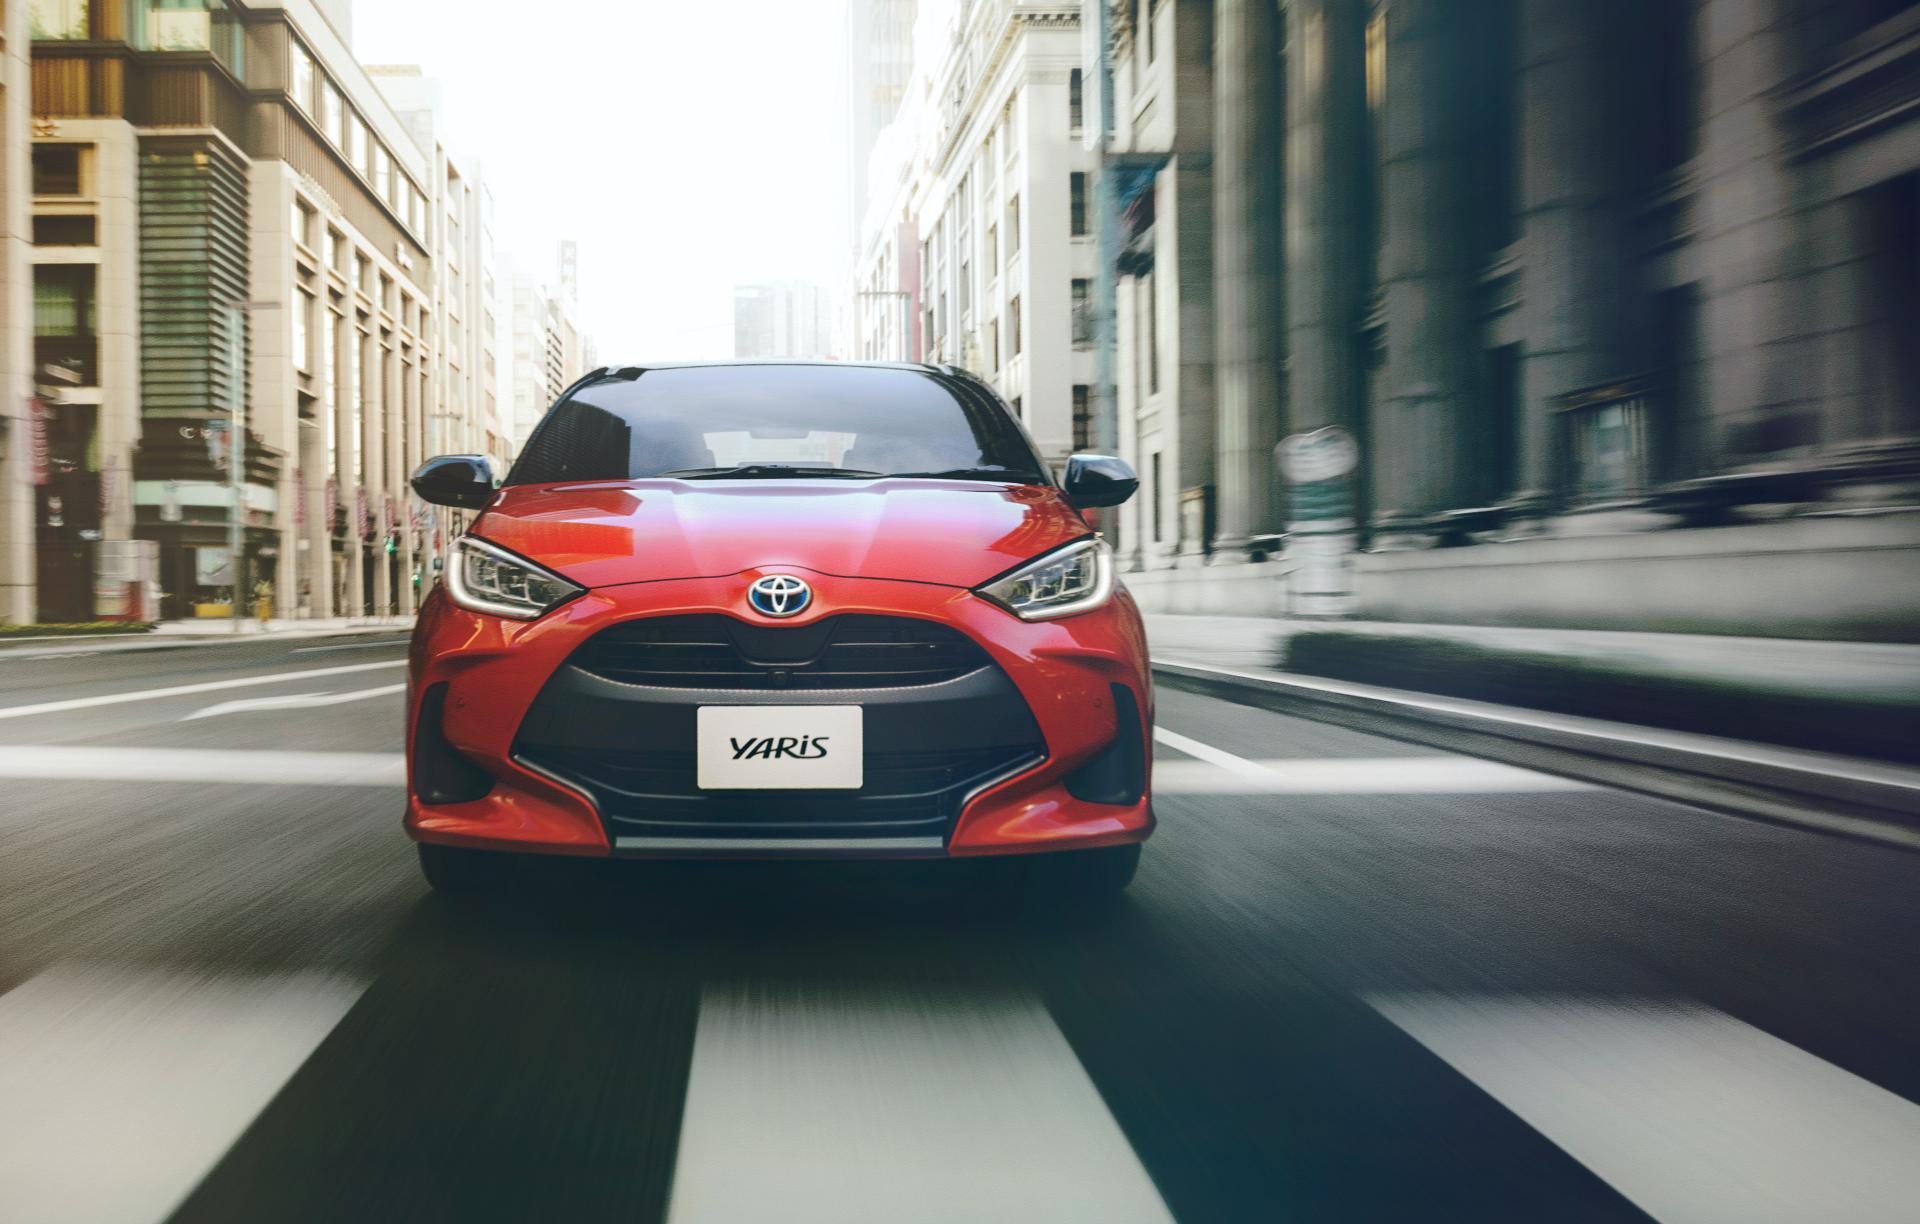 All-new Toyota Yaris 2020 กับราคาทางการที่ญี่ปุ่น เริ่มต้นไม่ถึงสี่แสนบาท